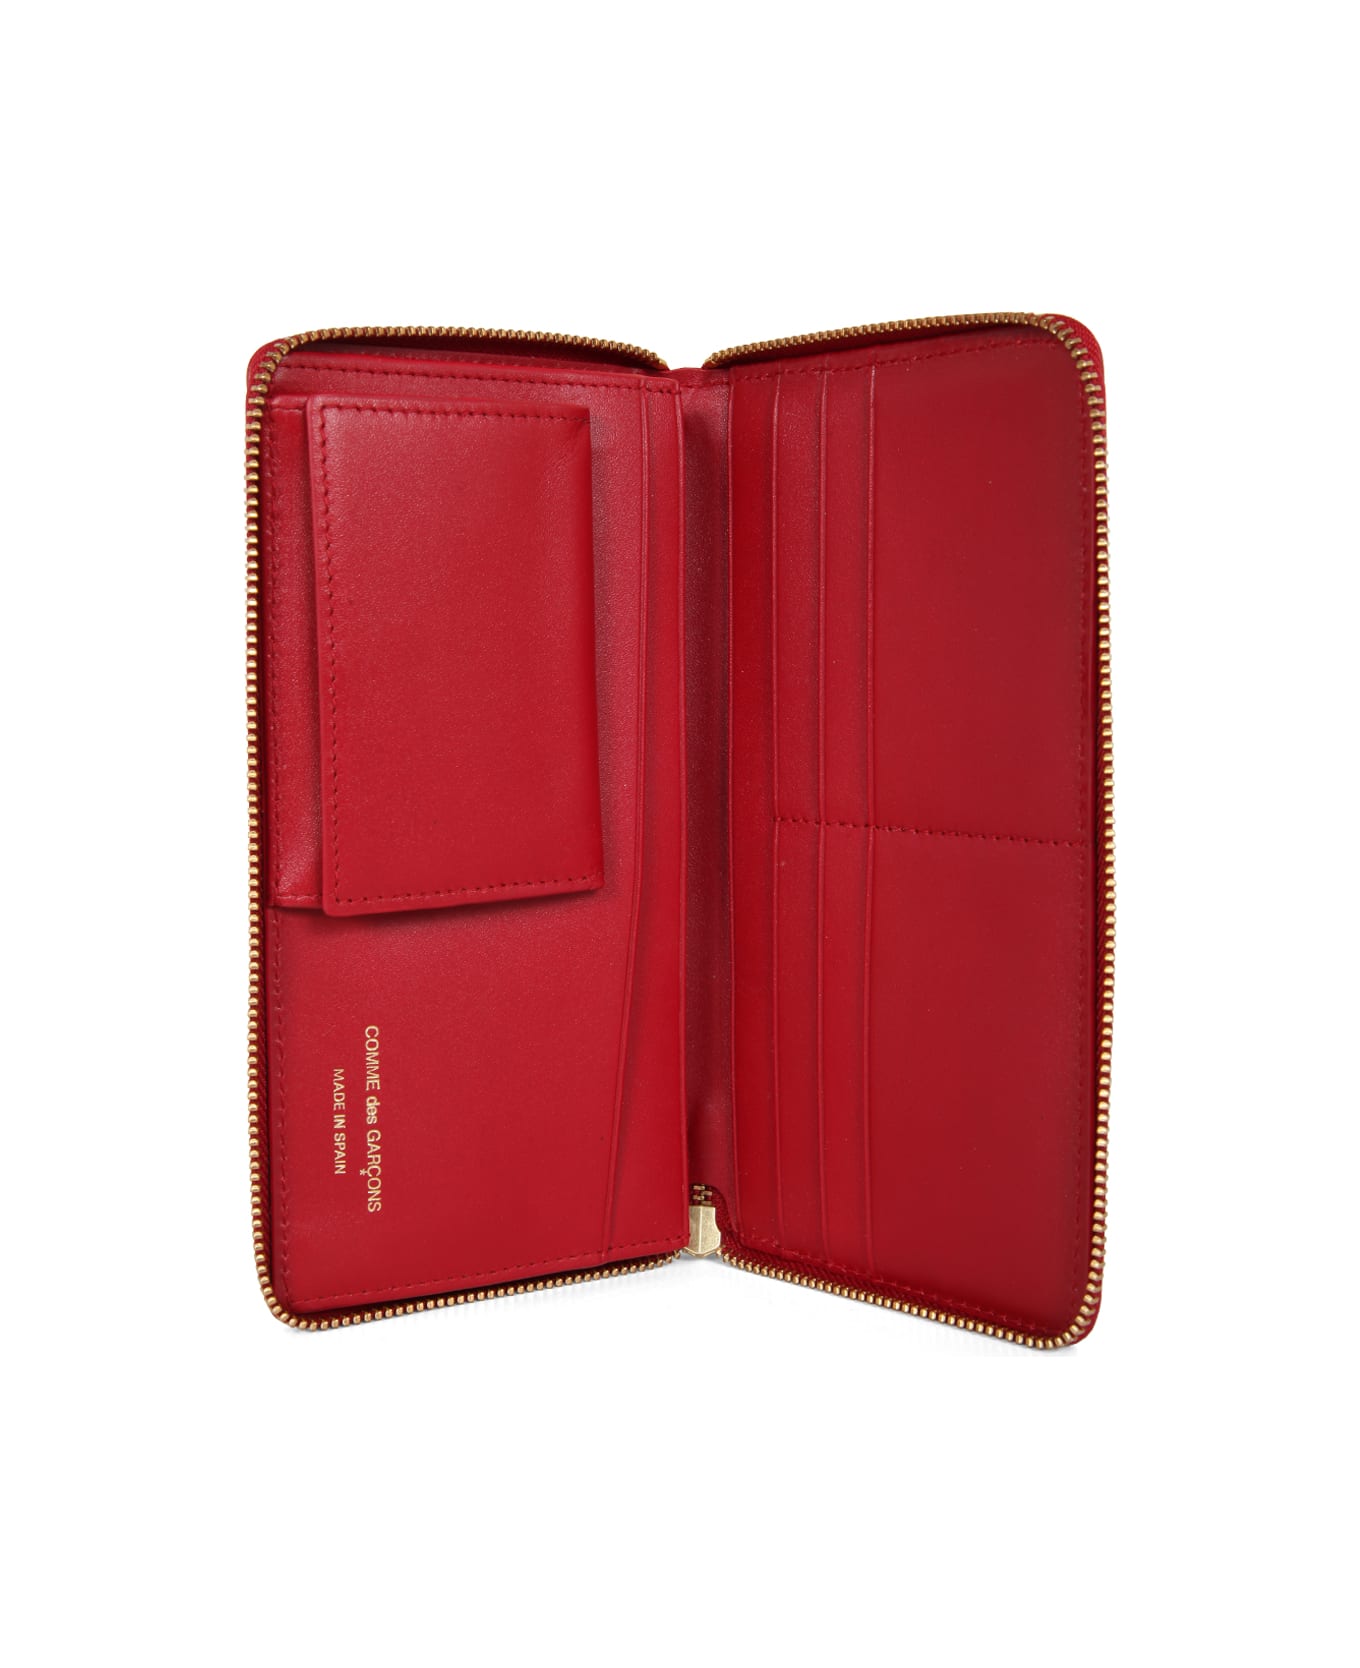 Comme des Garçons Wallet Classic Line Wallet - Red Red